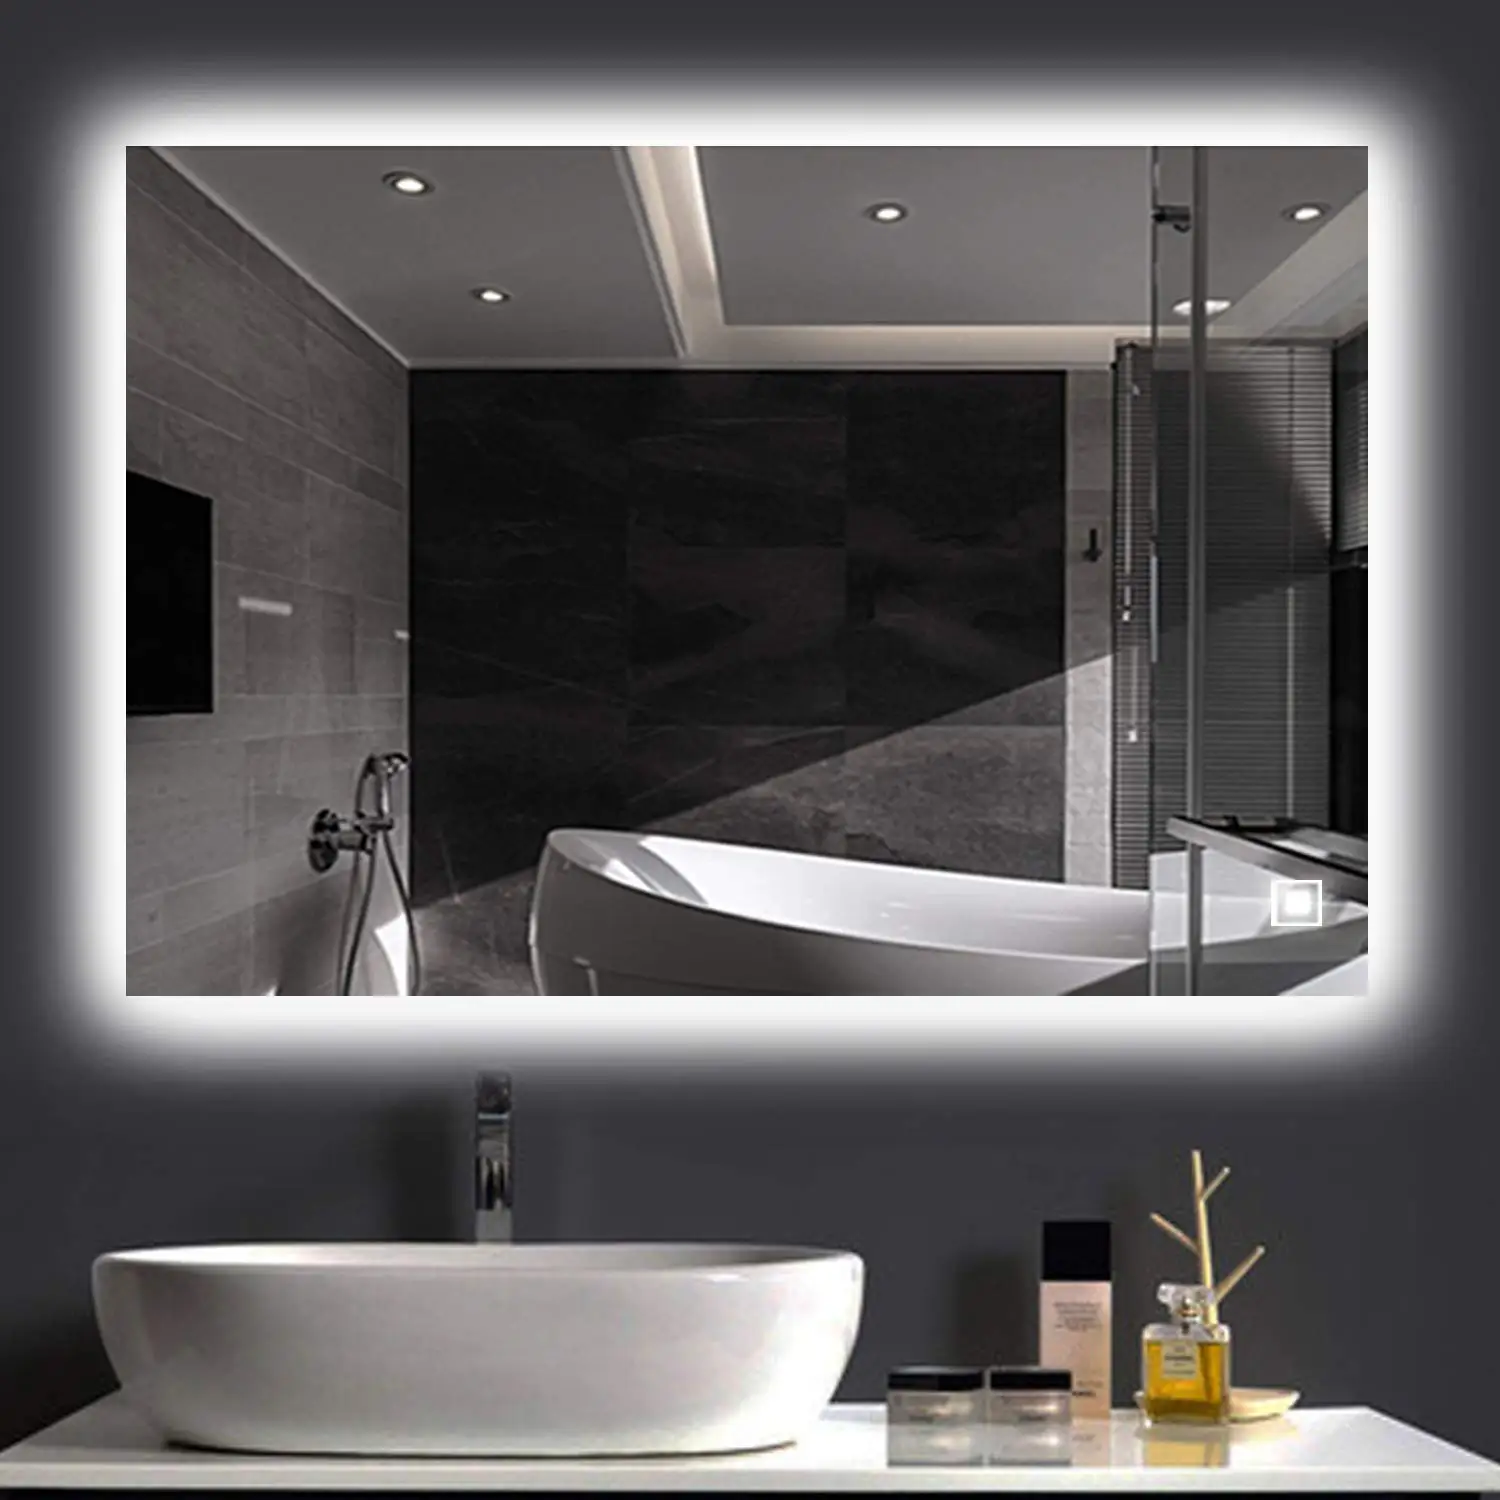 Bathroom wall mounted barber shop mirrors illuminated light vanity led android smart bath mirrors